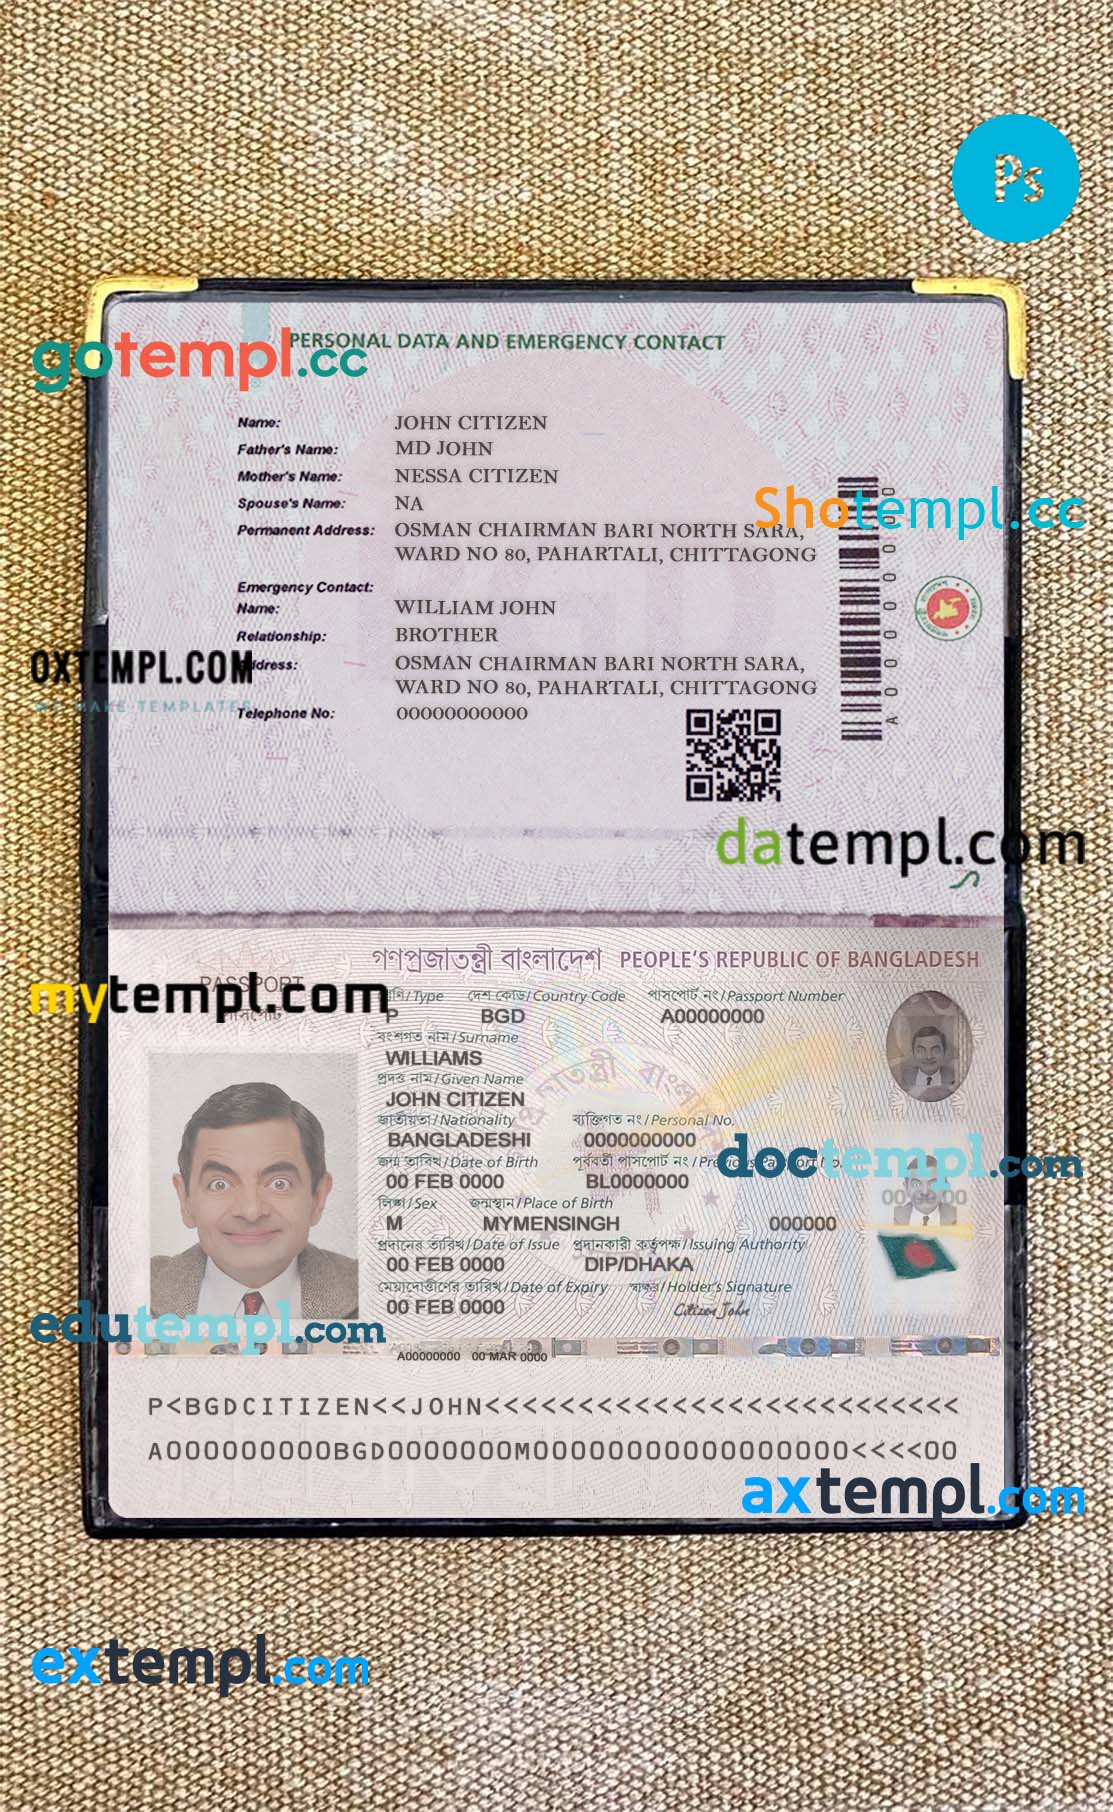 Moldova passport template in PSD format, fully editable